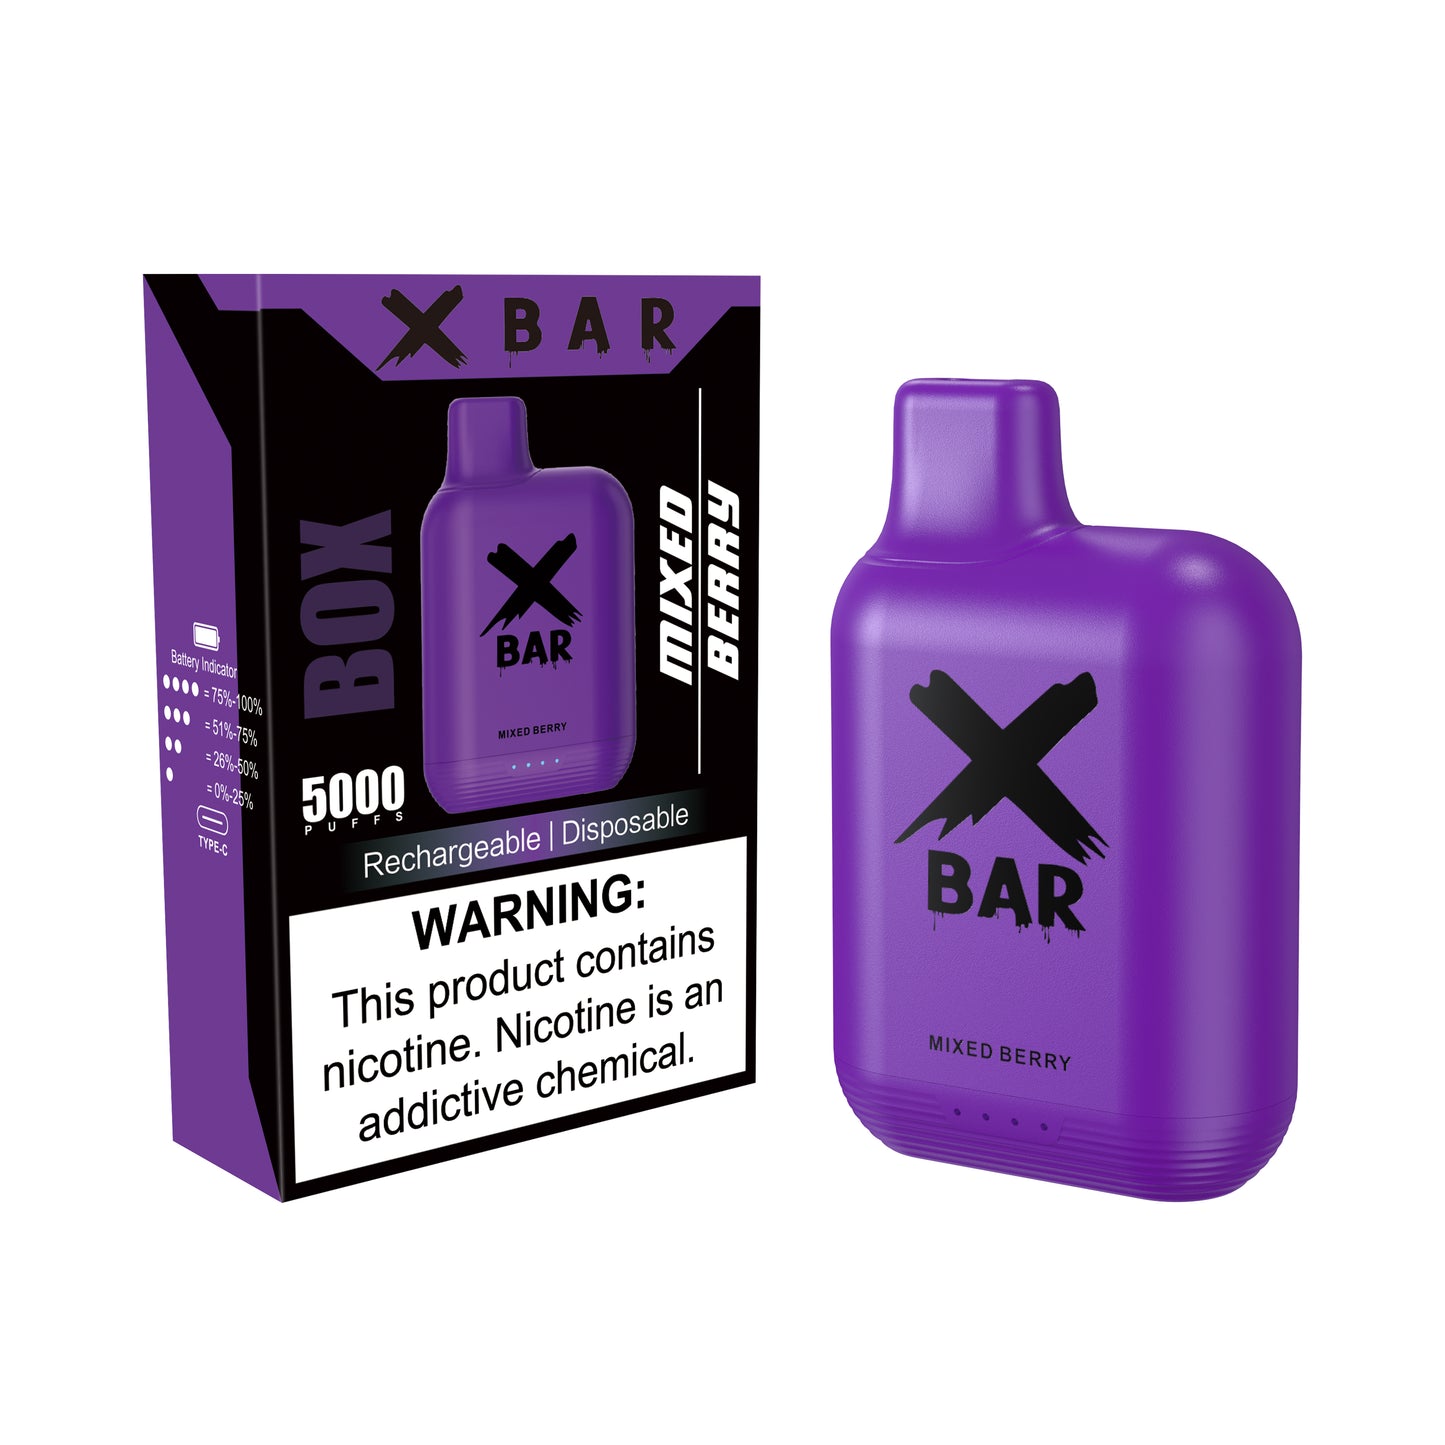 Mixed Berry Flavored Vape | X bar vapes